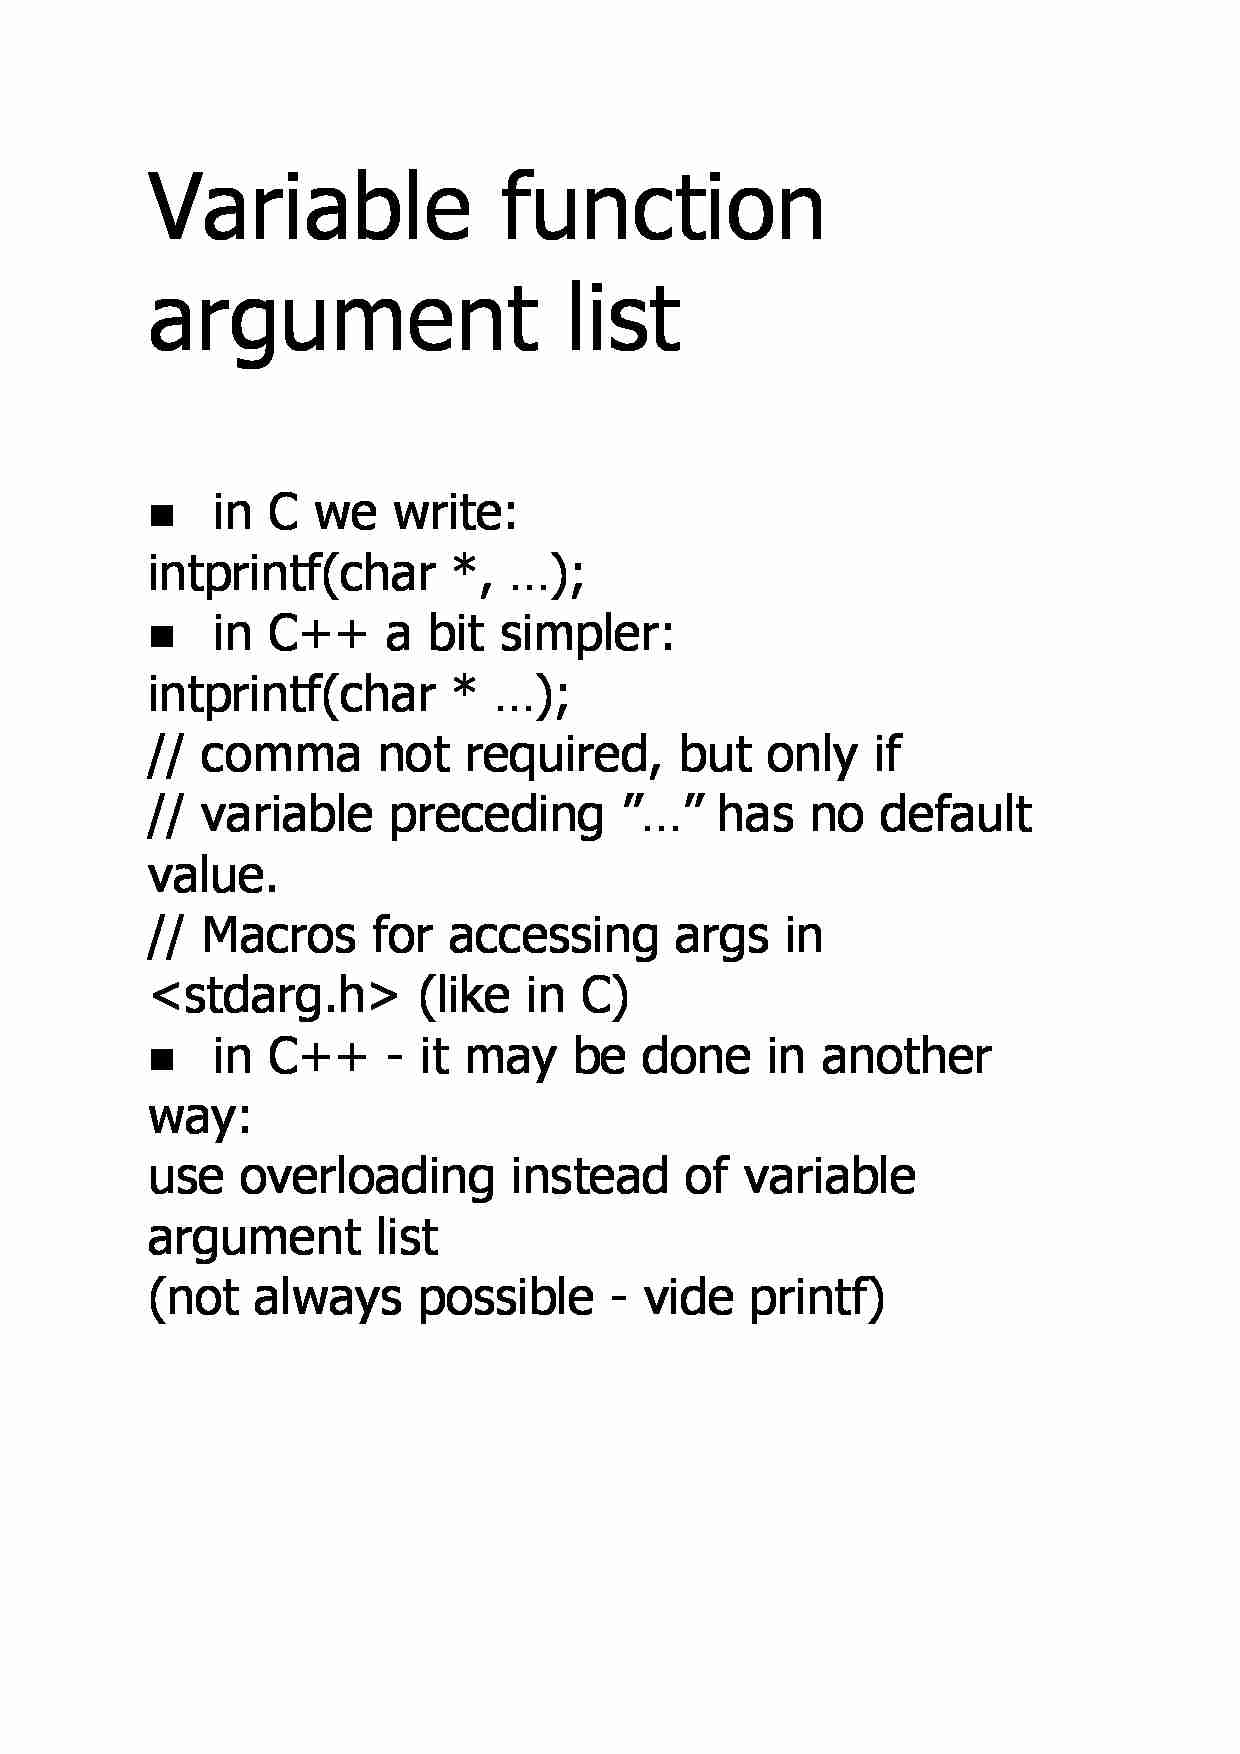 Variable function argument list - strona 1